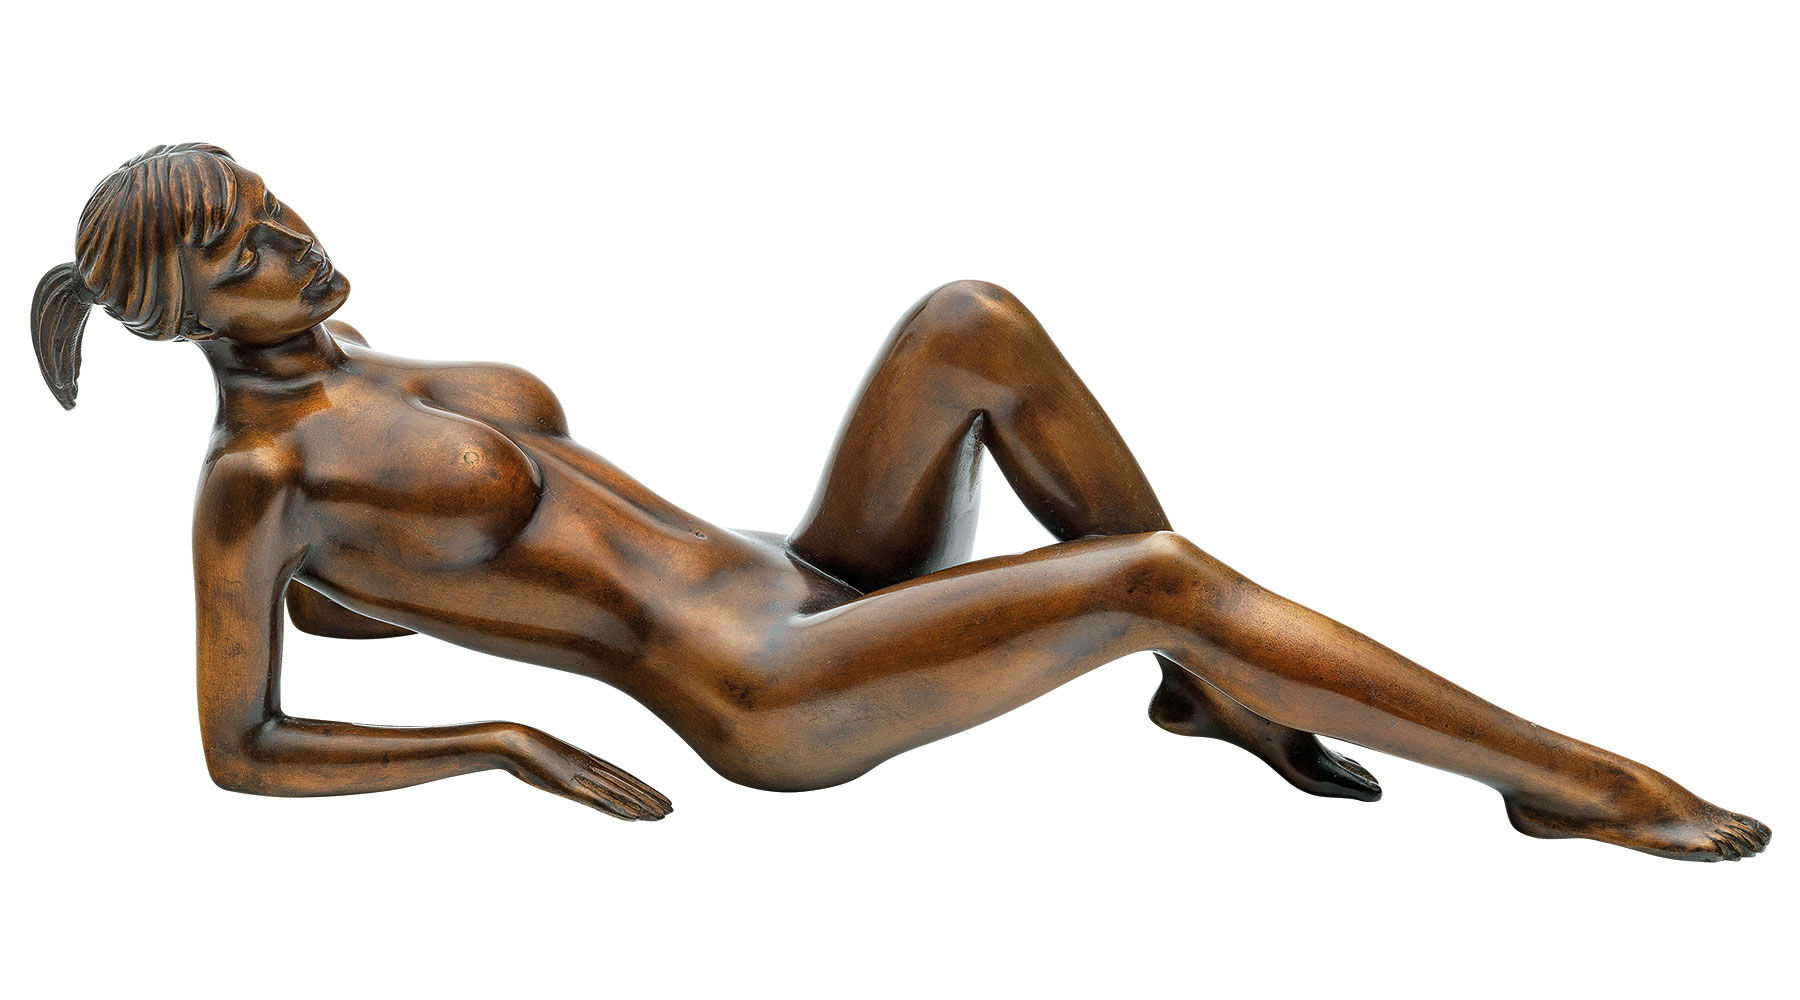 Sculpture "The Reclining Woman", brown bronze version by Richard Senoner